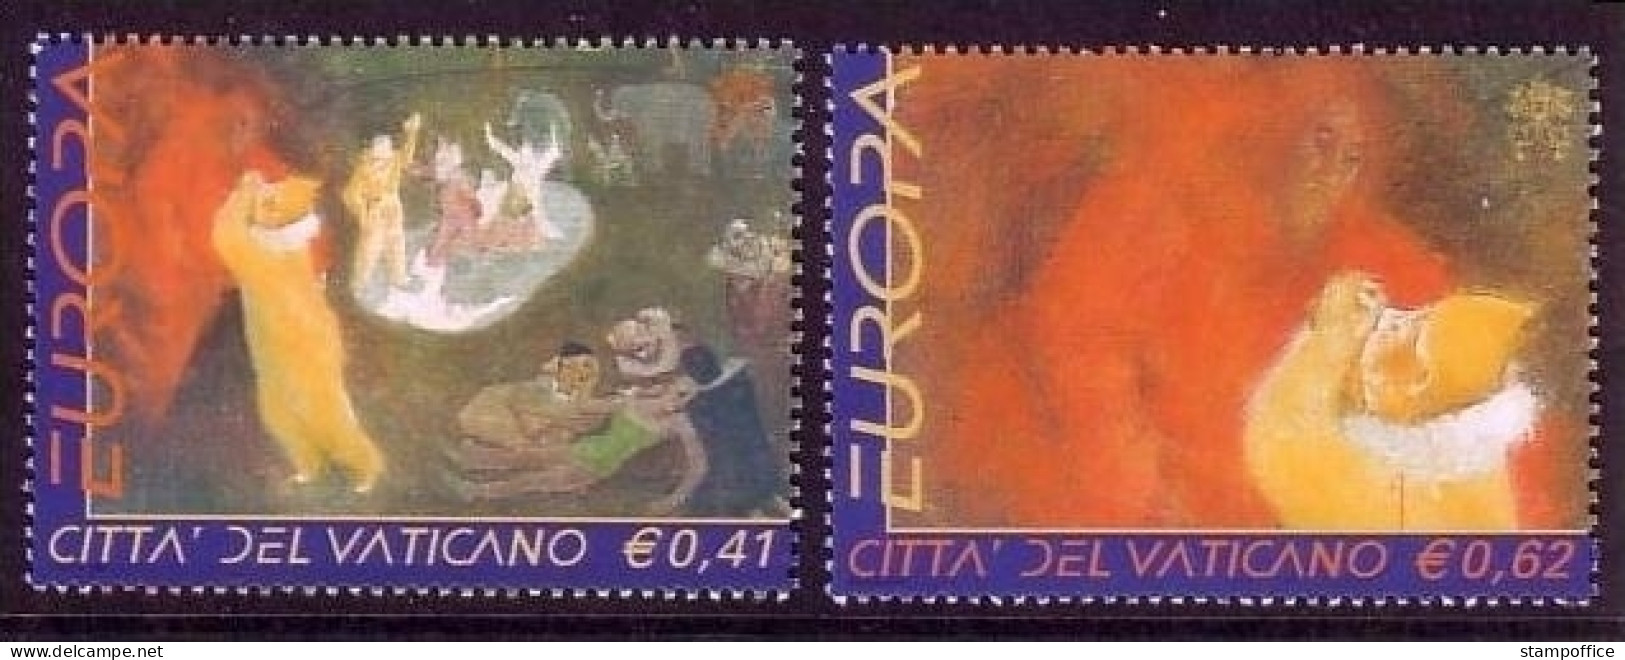 VATIKAN MI-NR. 1415-1416 POSTFRISCH(MINT) EUROPA 2002 - ZIRKUS - 2002